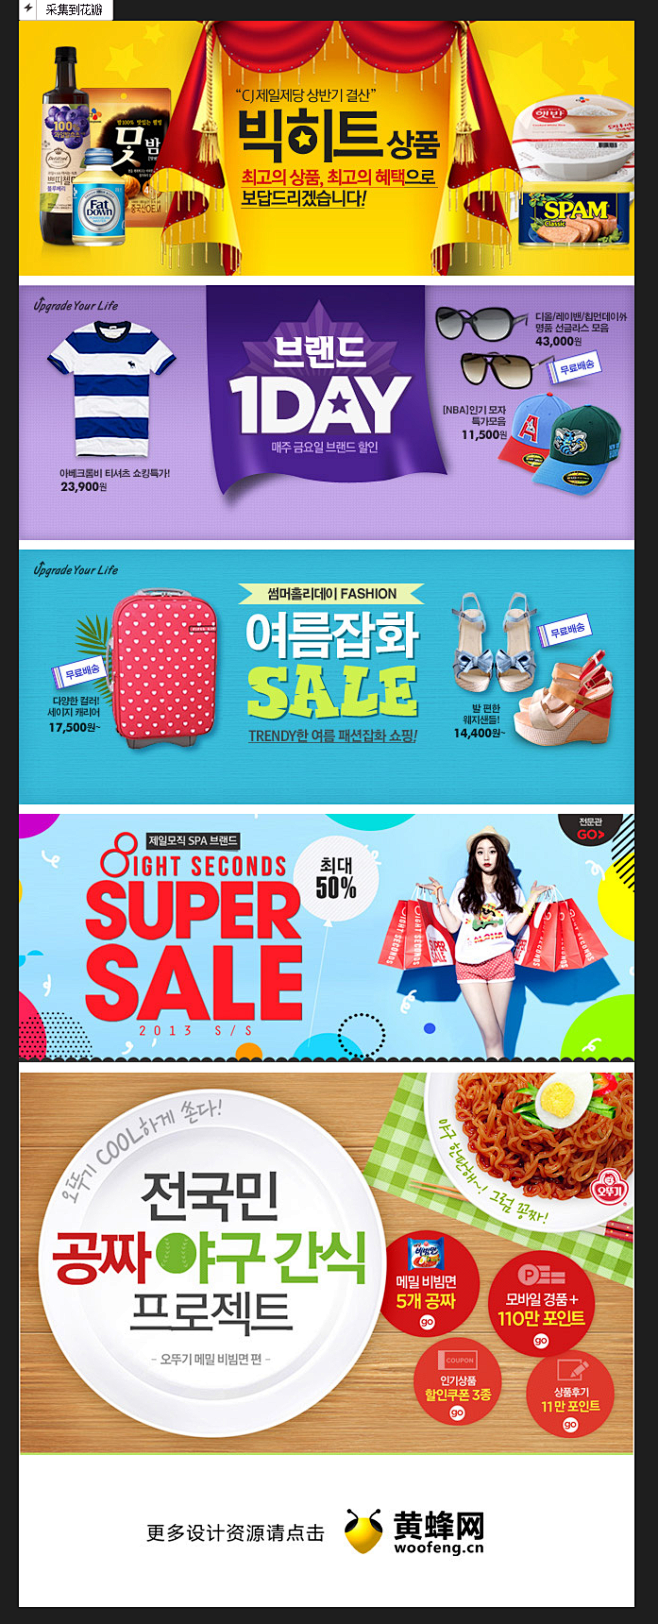 韩国11st购物网站图片banner设计...